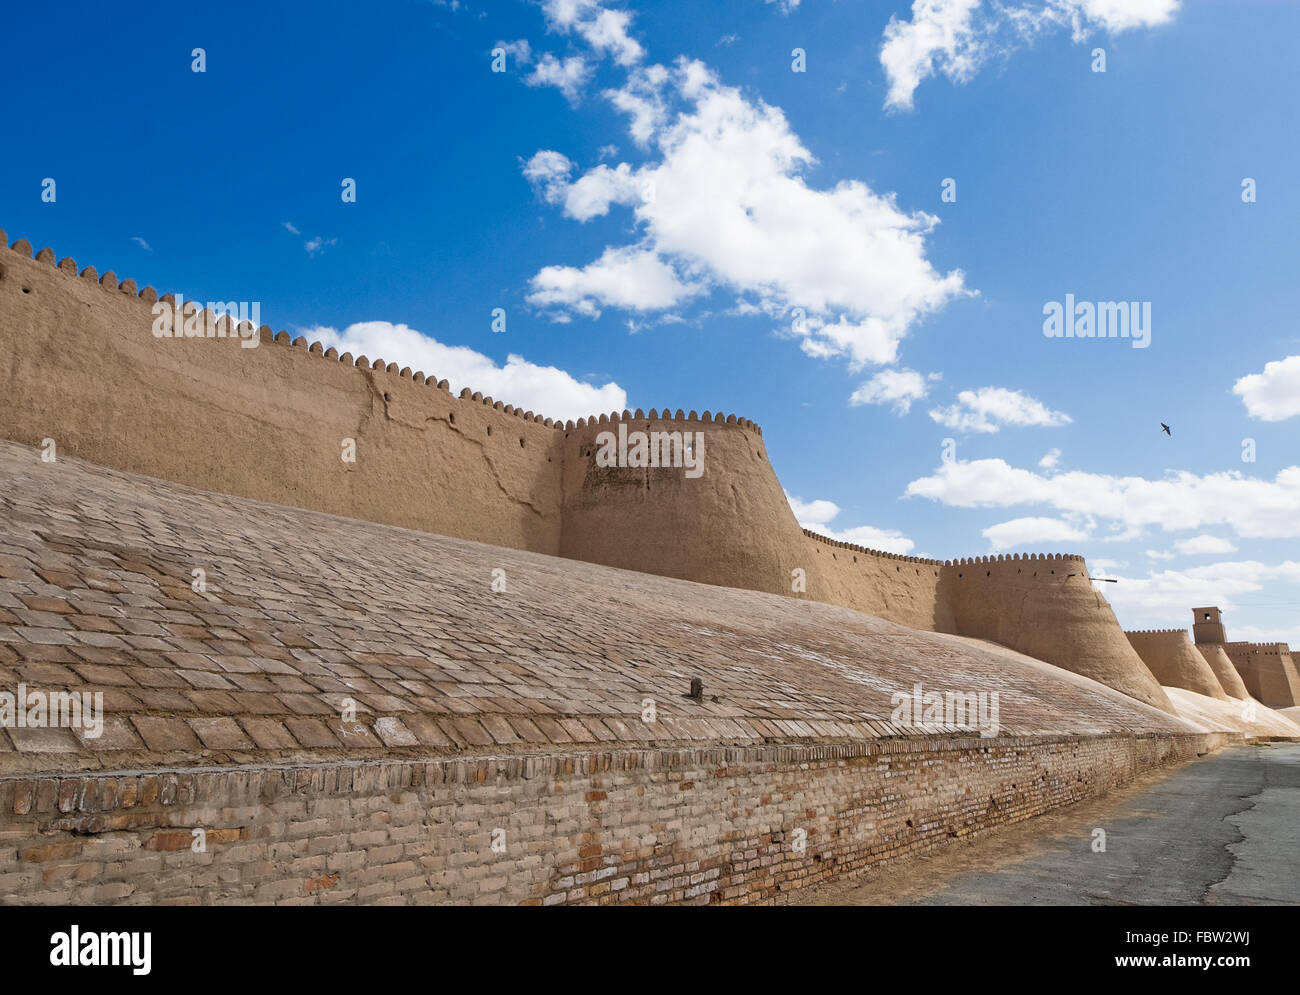 Walls of an ancient city of Khiva, Uzbekistan Stock Photo